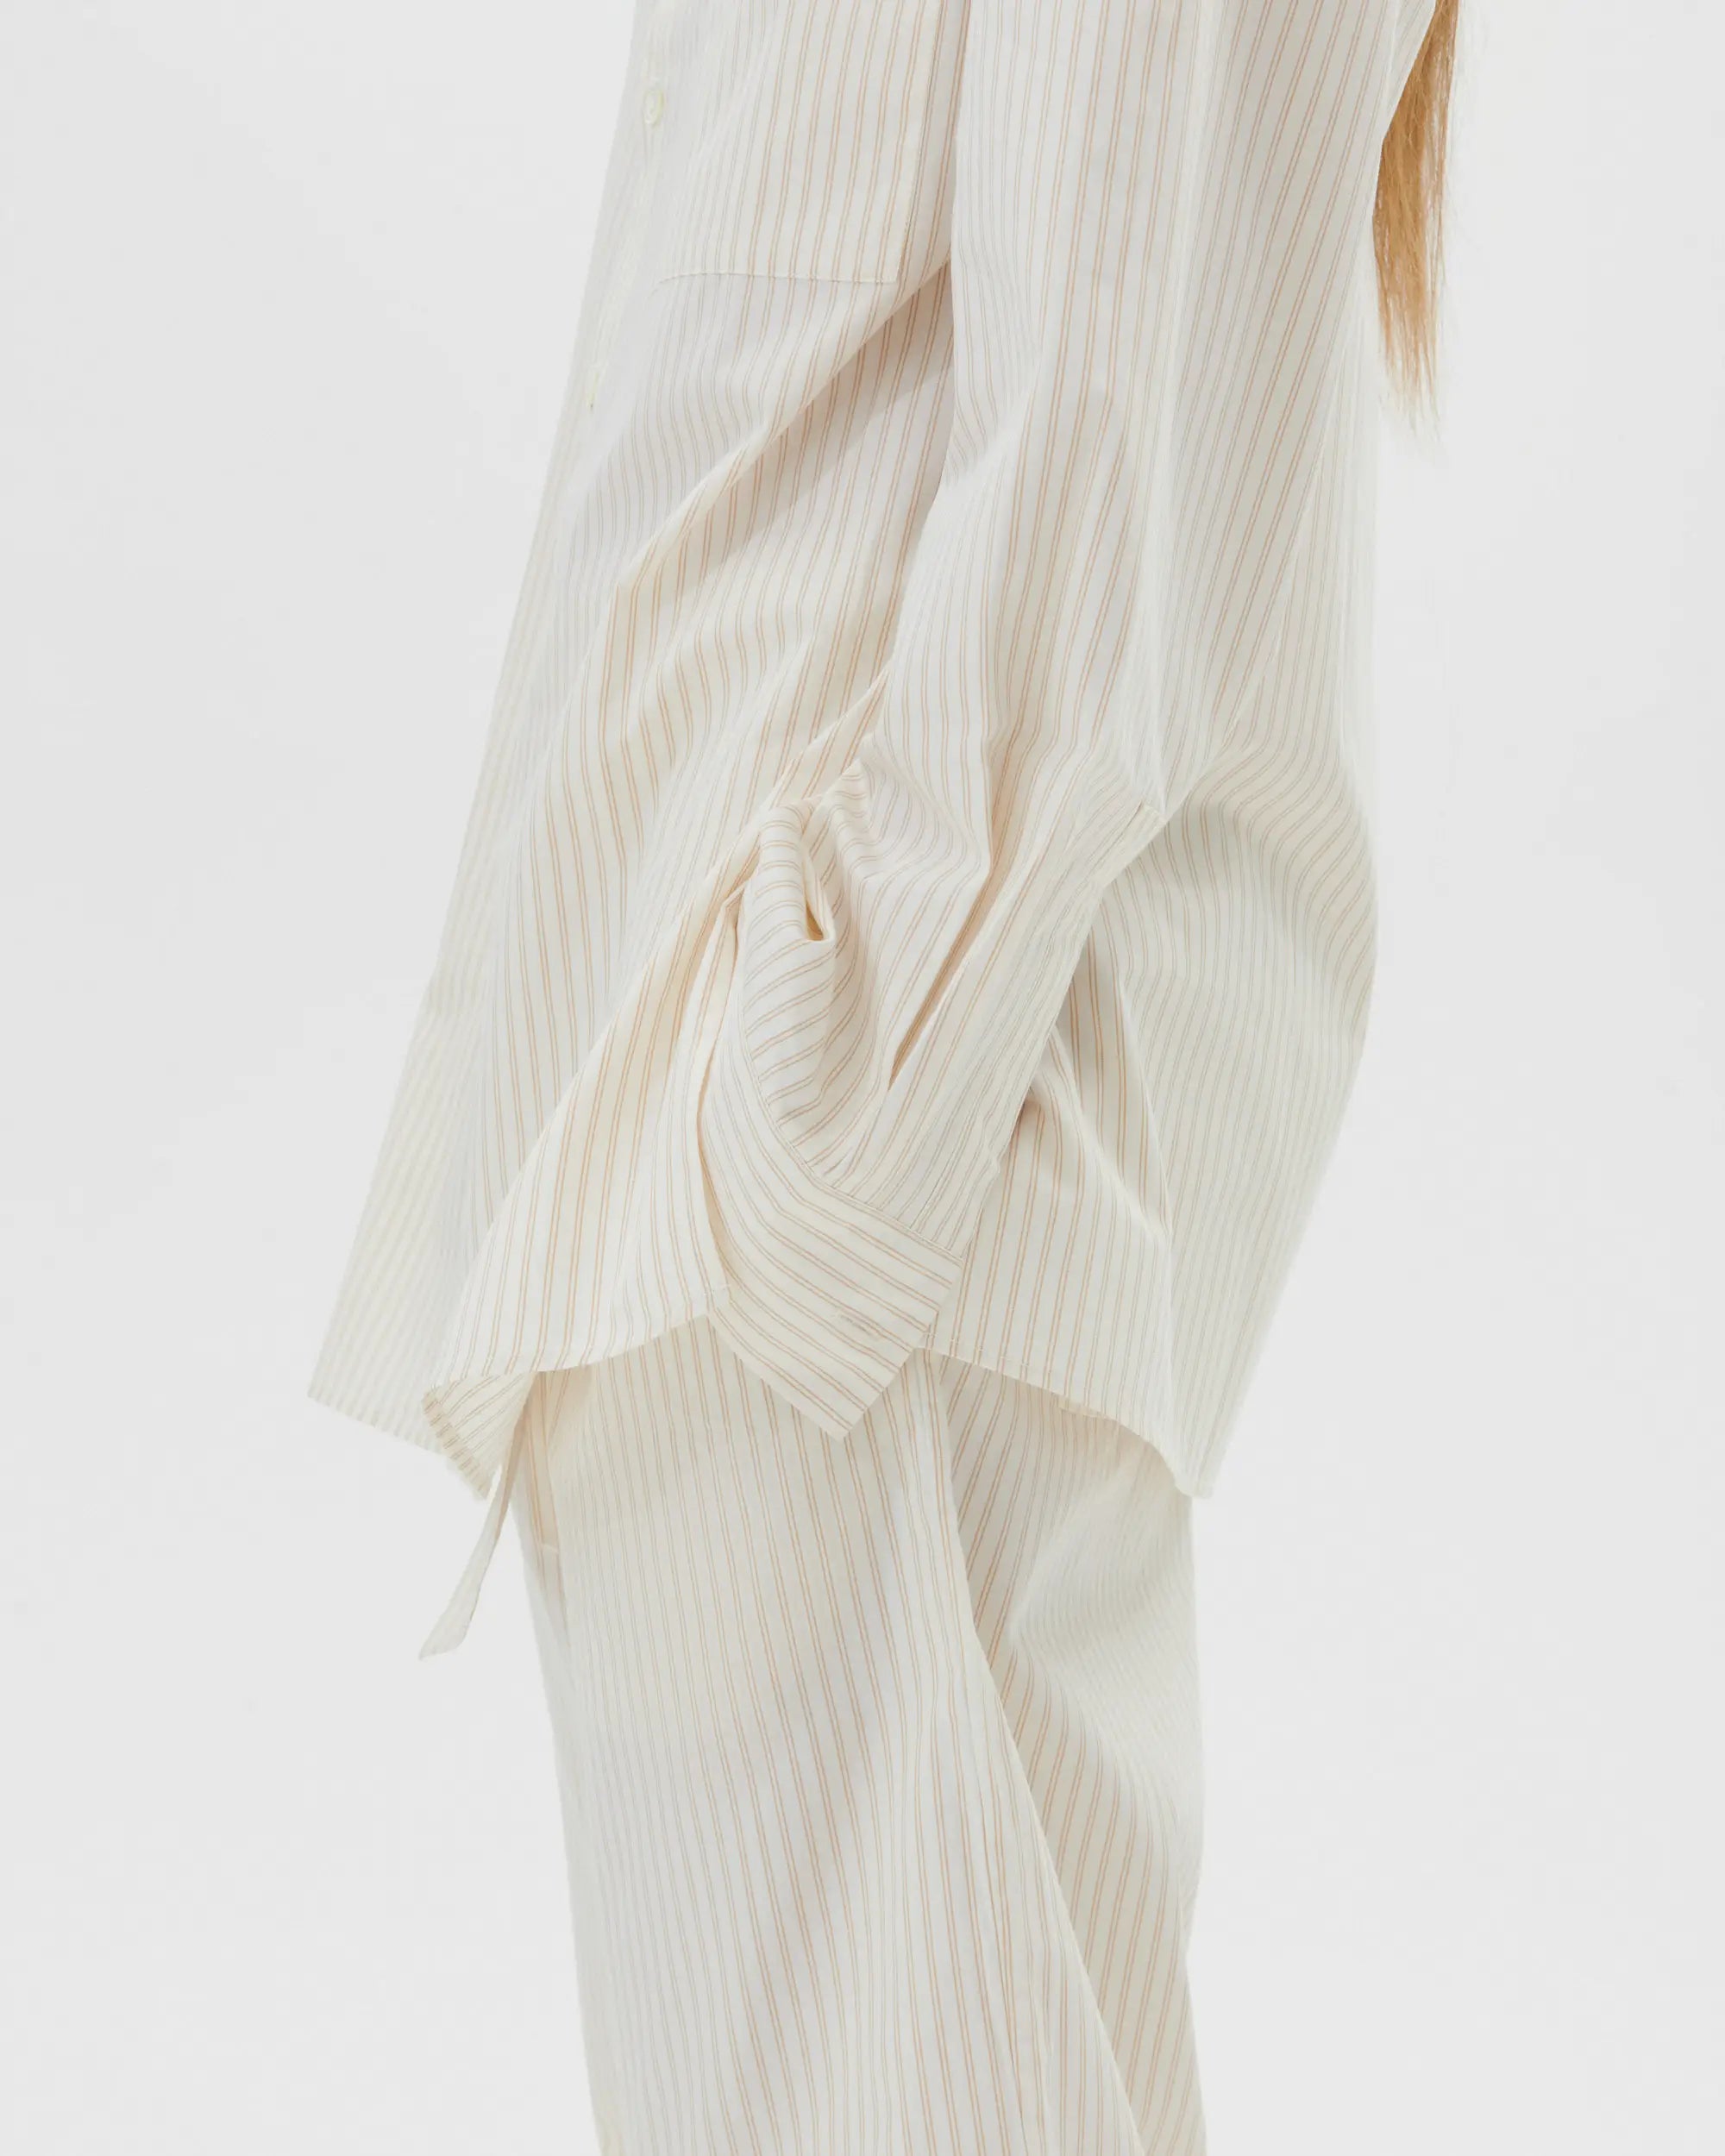 Tekla x Birkenstock Cotton Shirt - Wheat Stripes